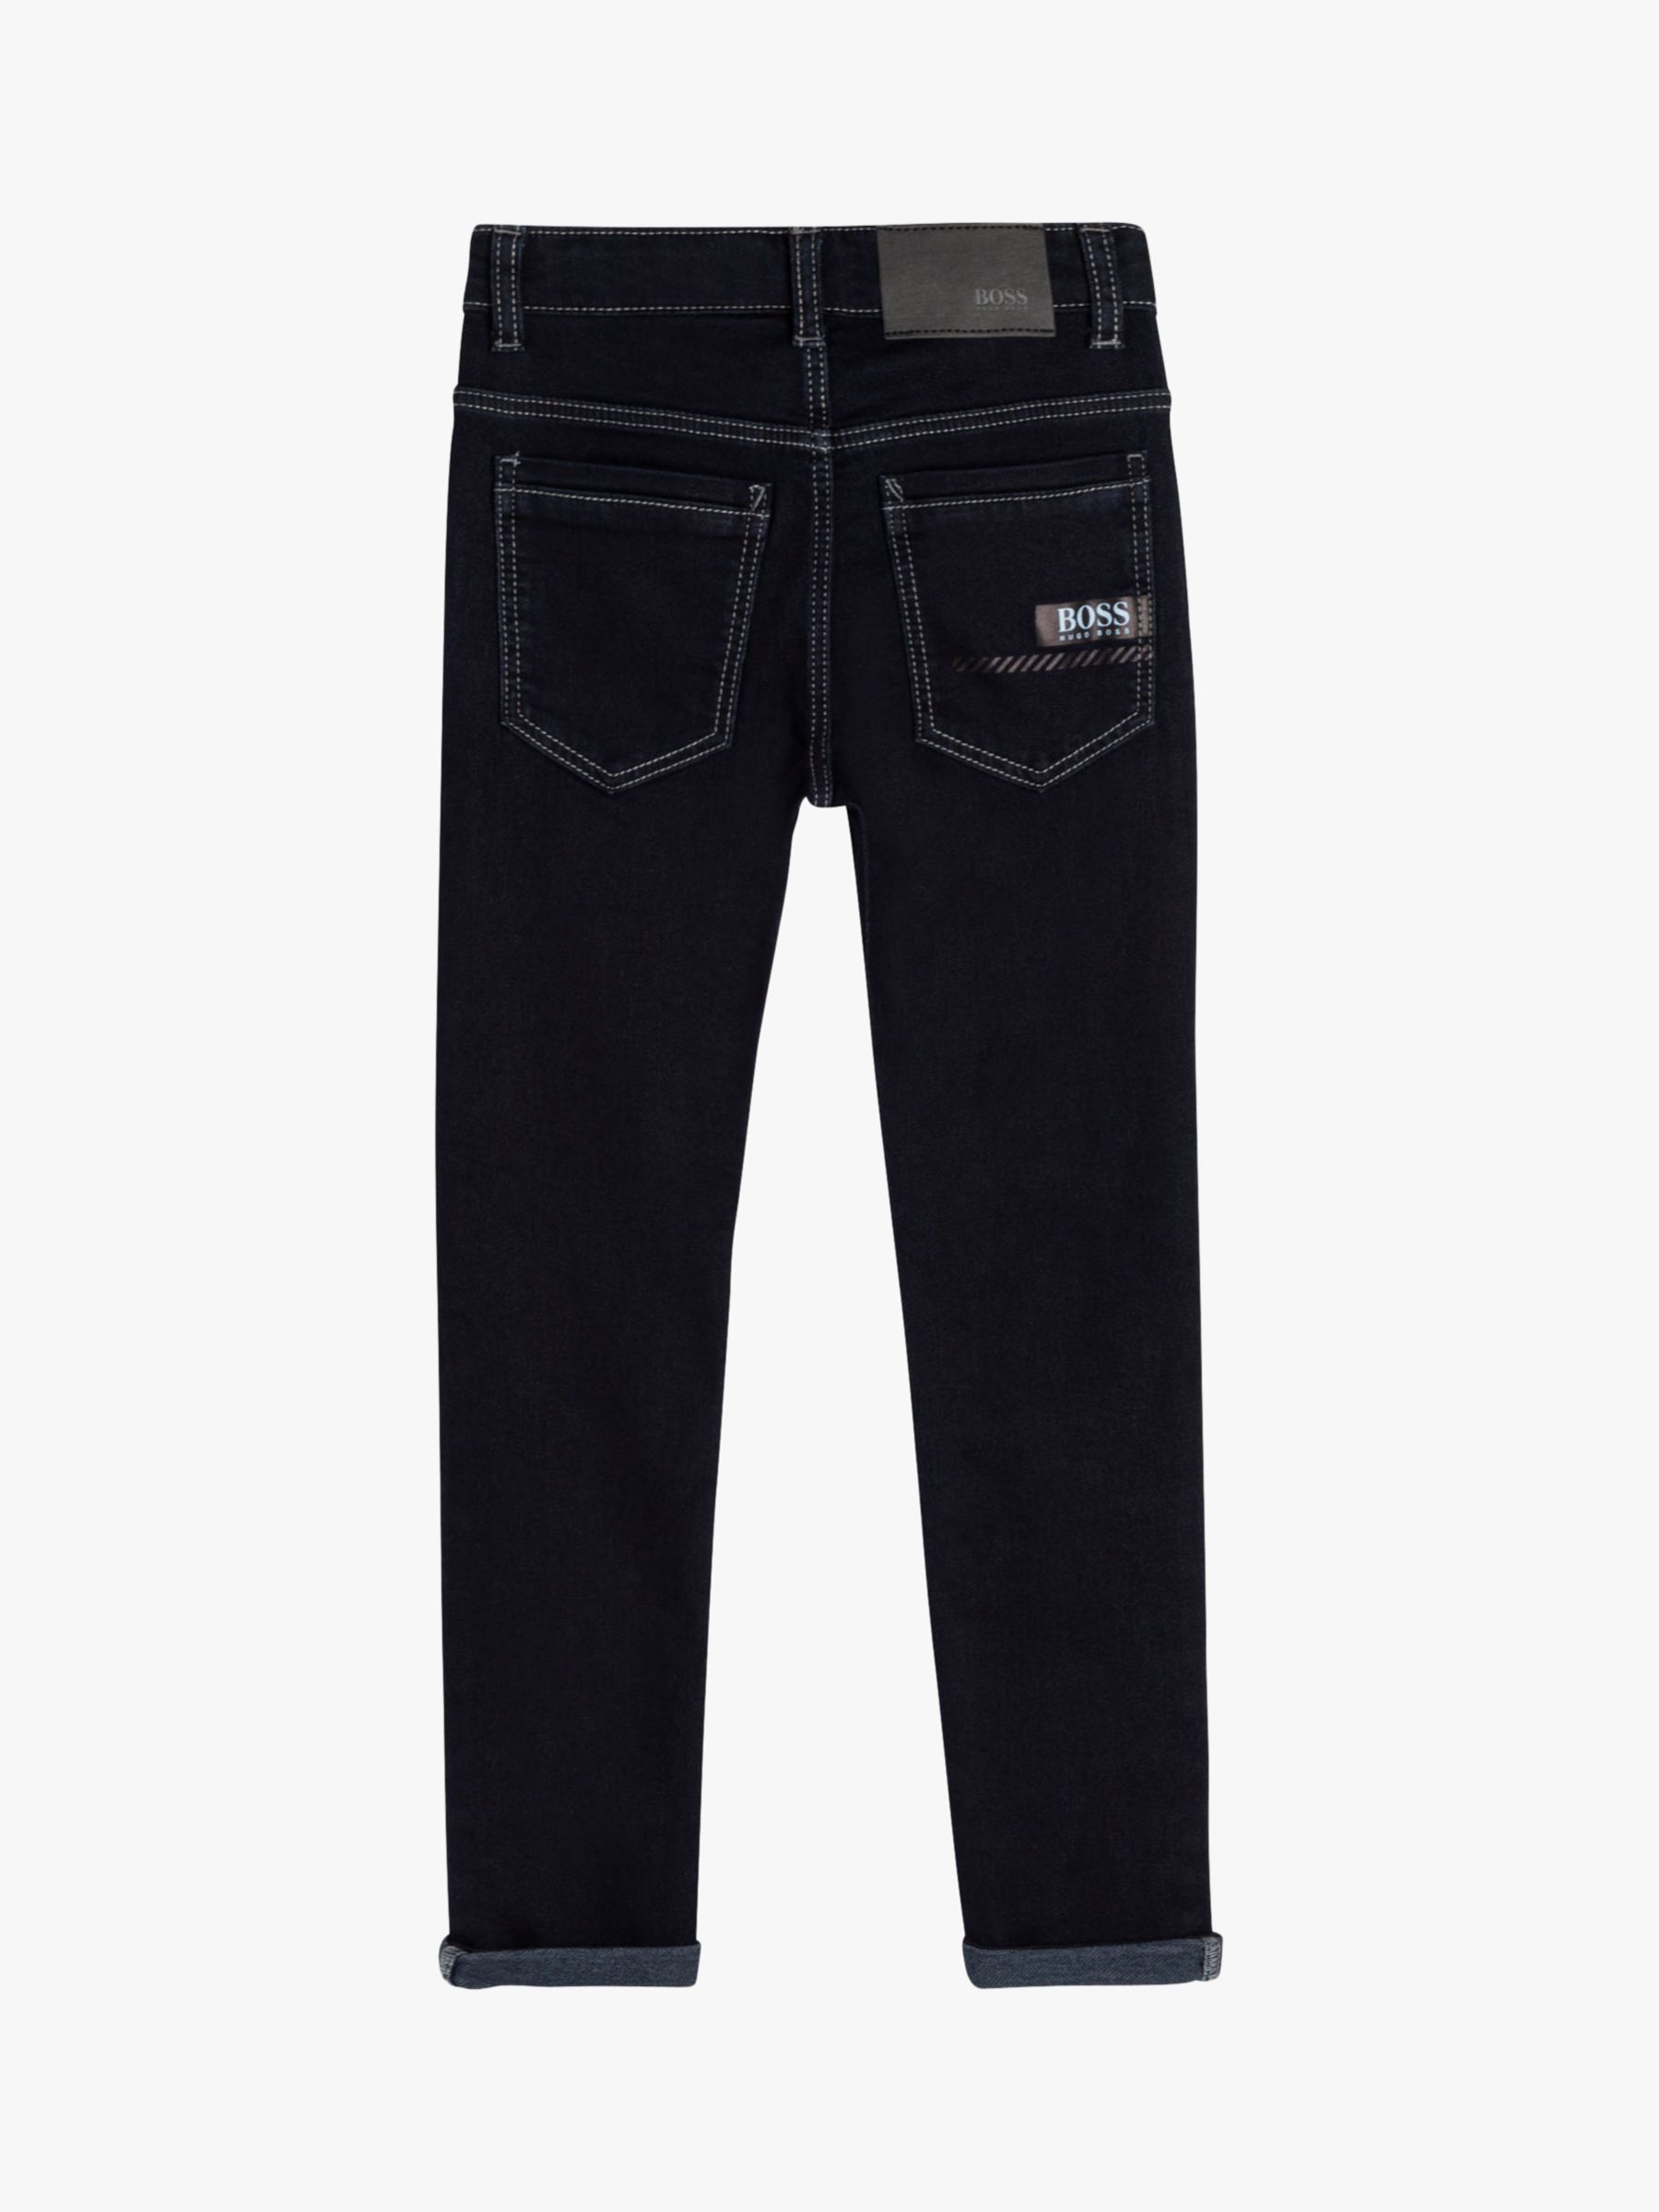 HUGO BOSS Boy's Waist Adjustable Plain Denim Jeans, Rinse Wash, 6-9 months